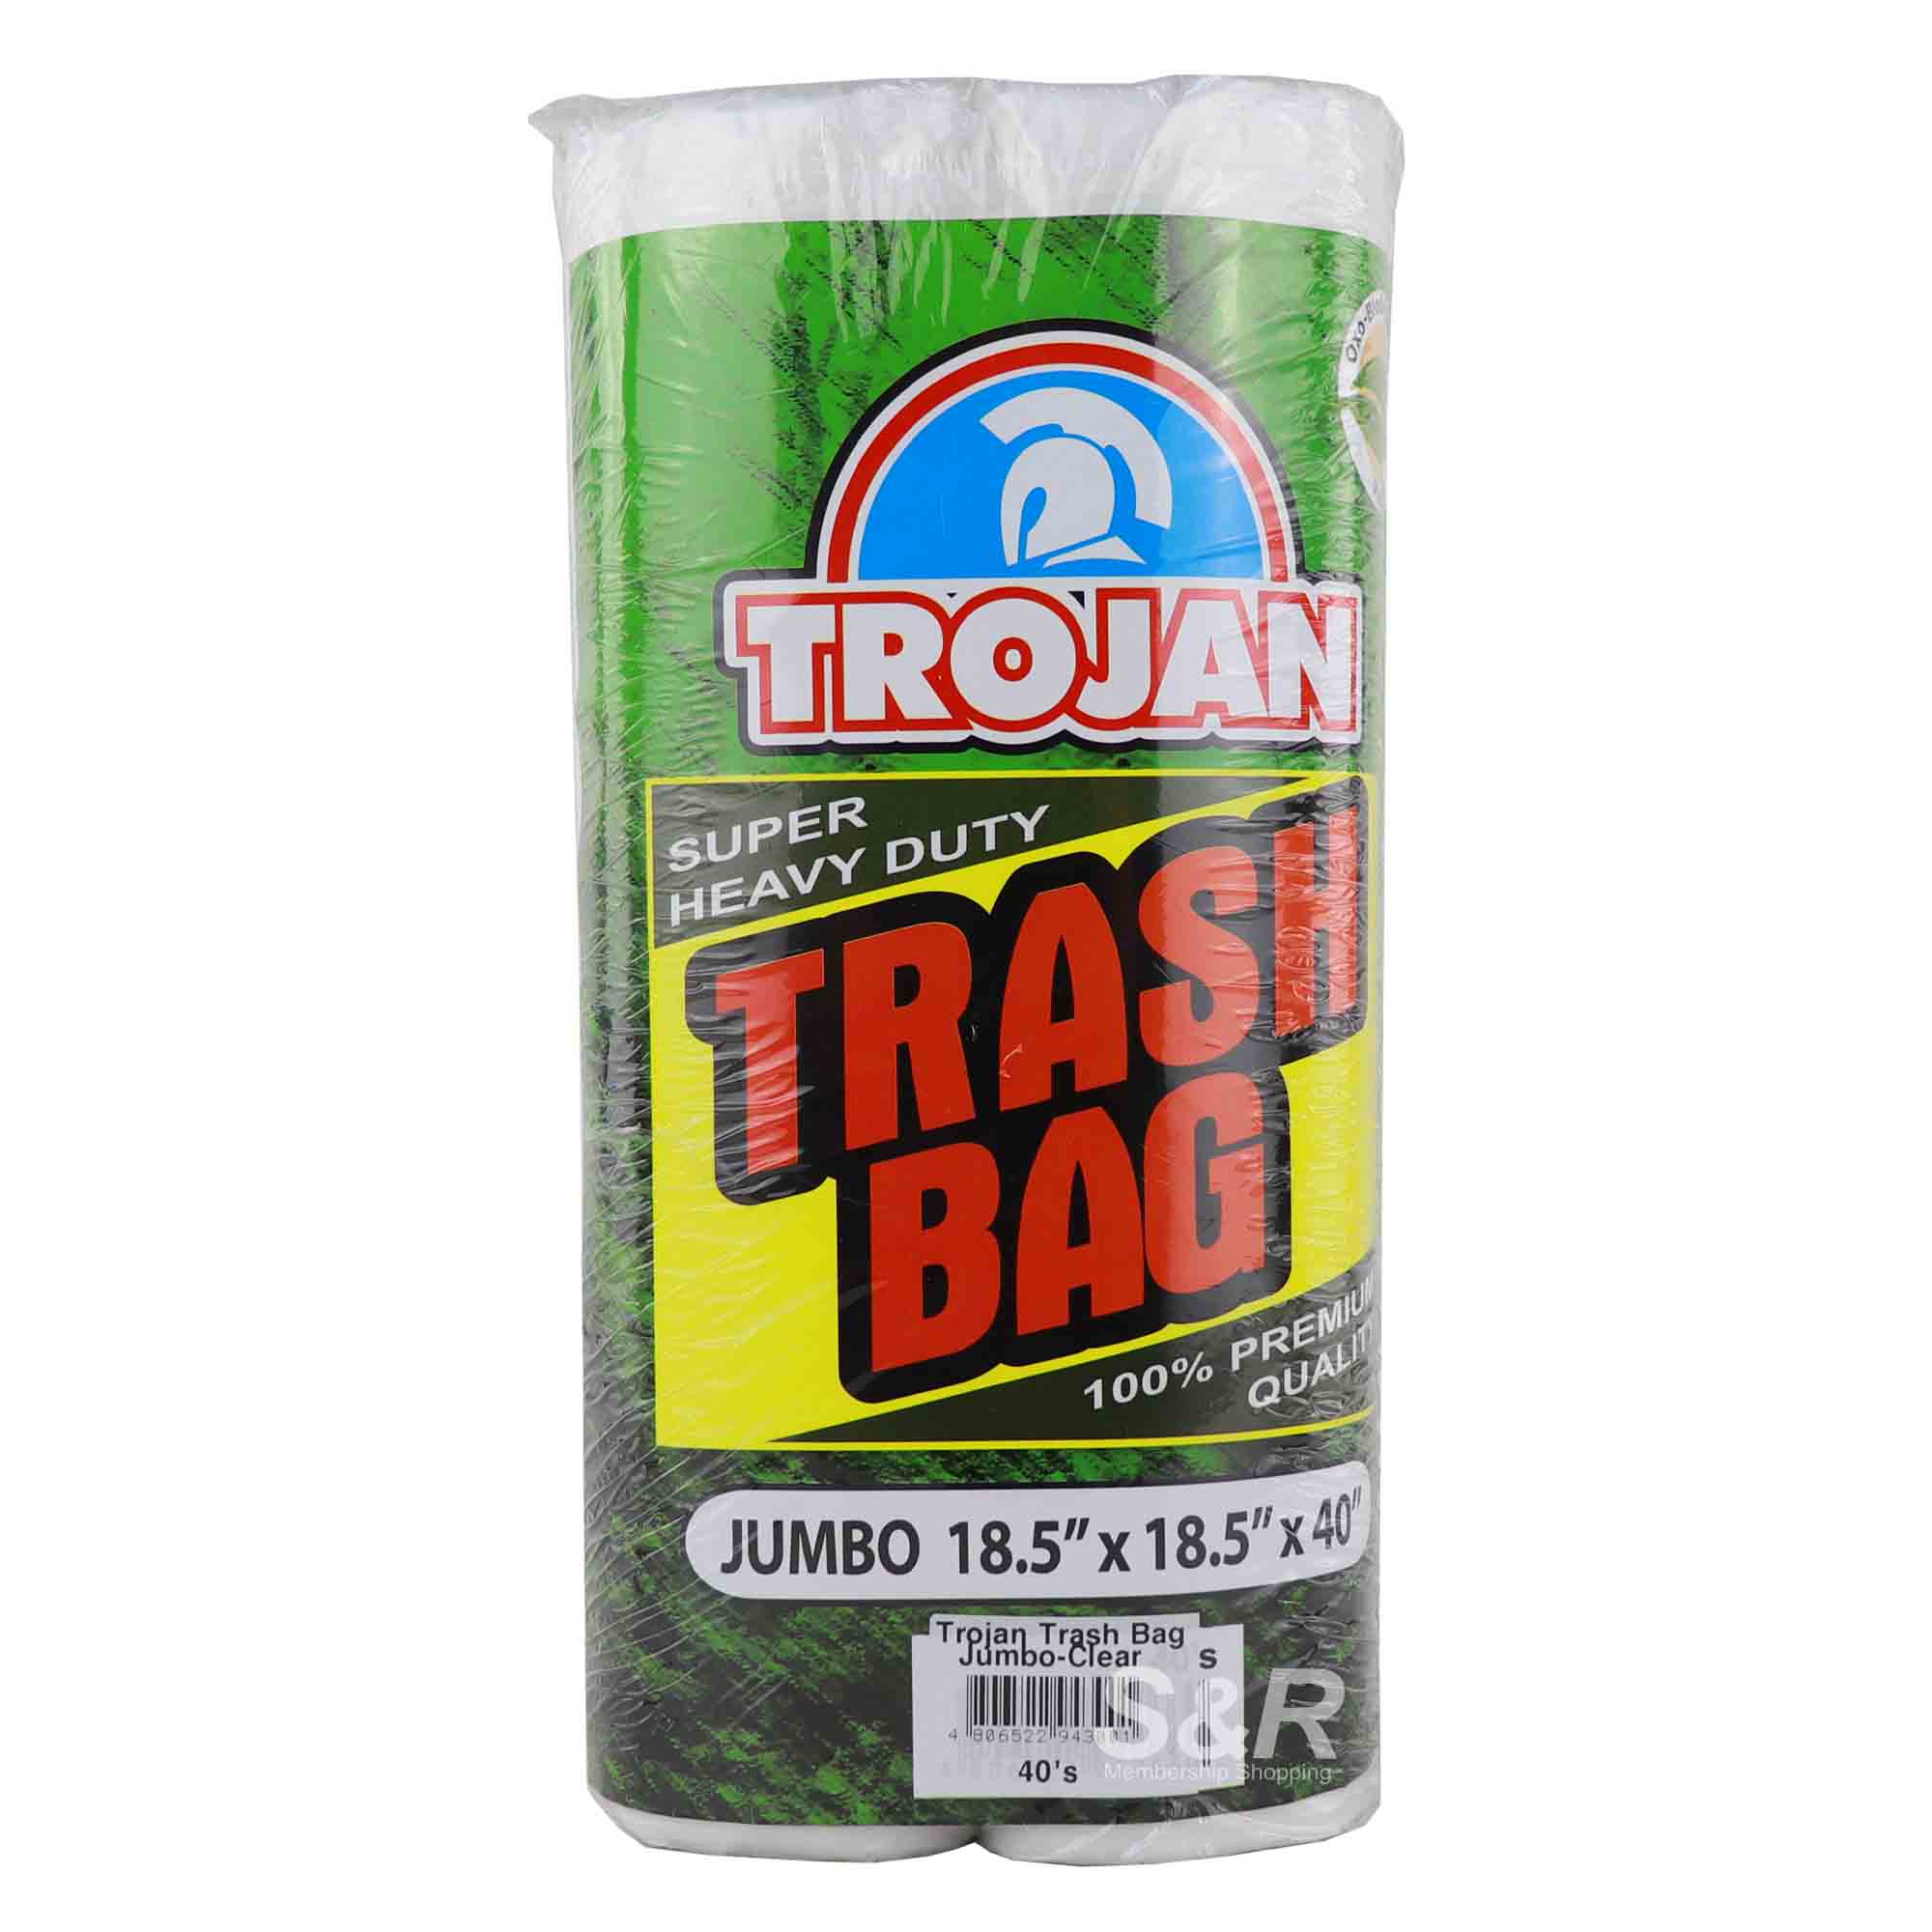 Trojan Super Heavy Duty Trash Bag Jumbo 40pcs